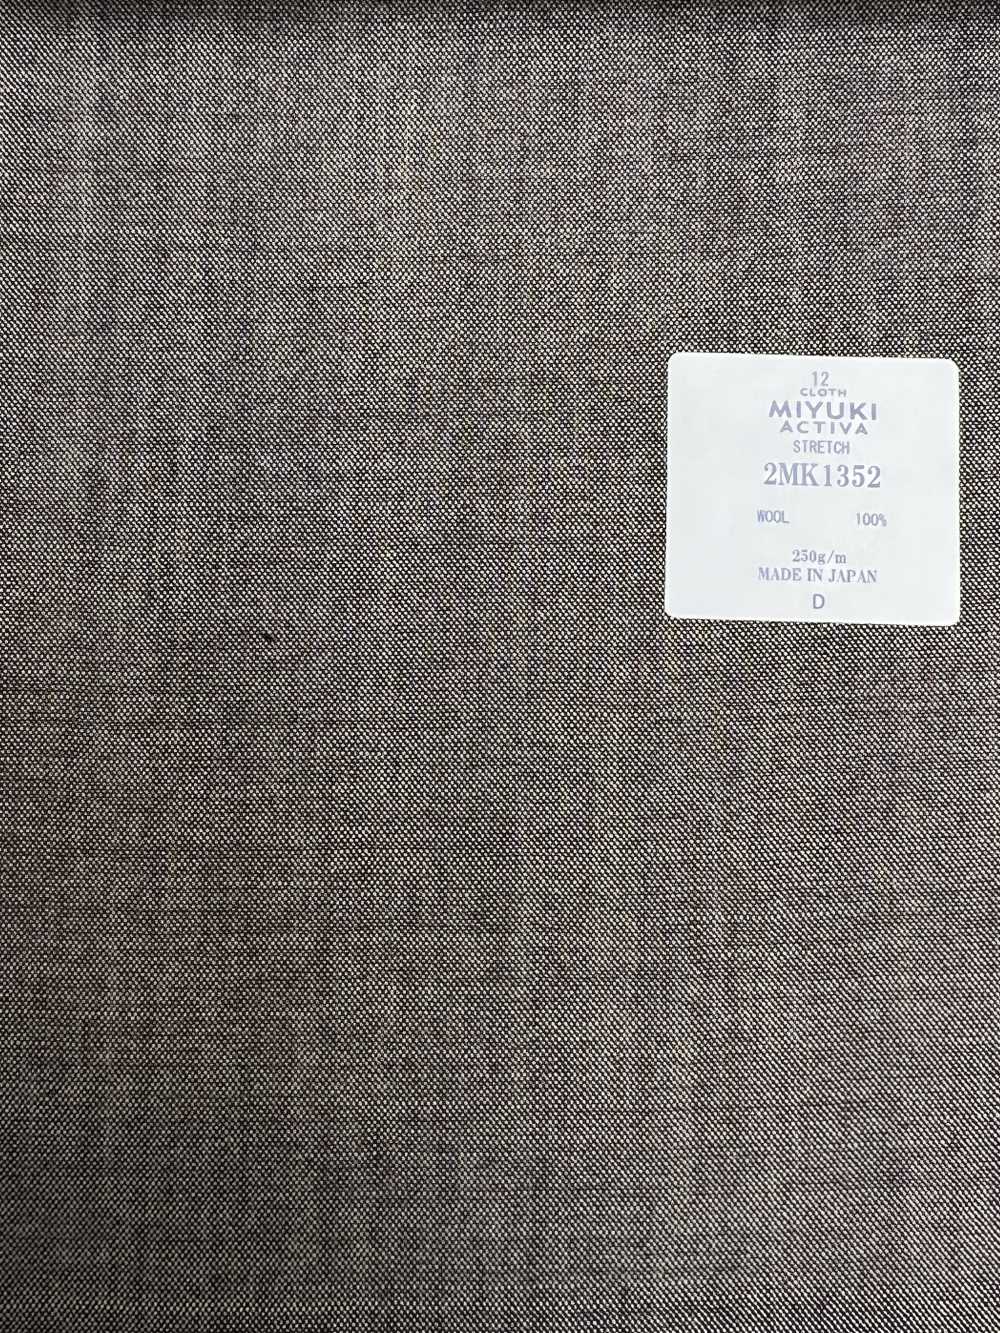 2MK1352 MIYUKI COMFORT ACTIVA STRETCH Hellbraun[Textil] Miyuki-Keori (Miyuki)